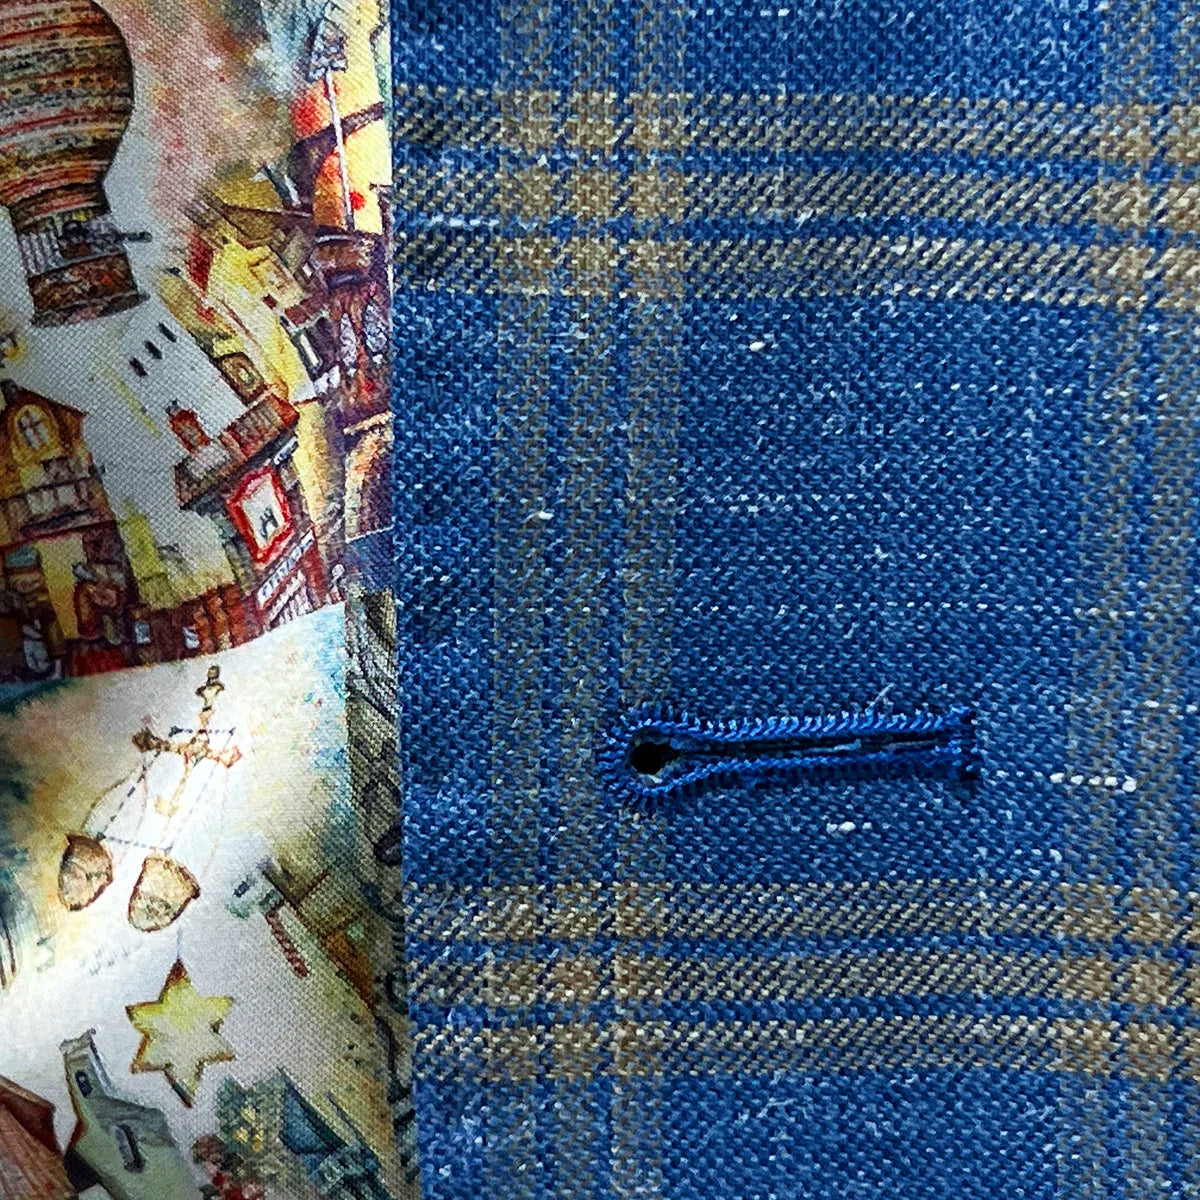 Jacket buttonhole panel view showcasing the button arrangements on a sky blue with tan windowpane men's sport coat.